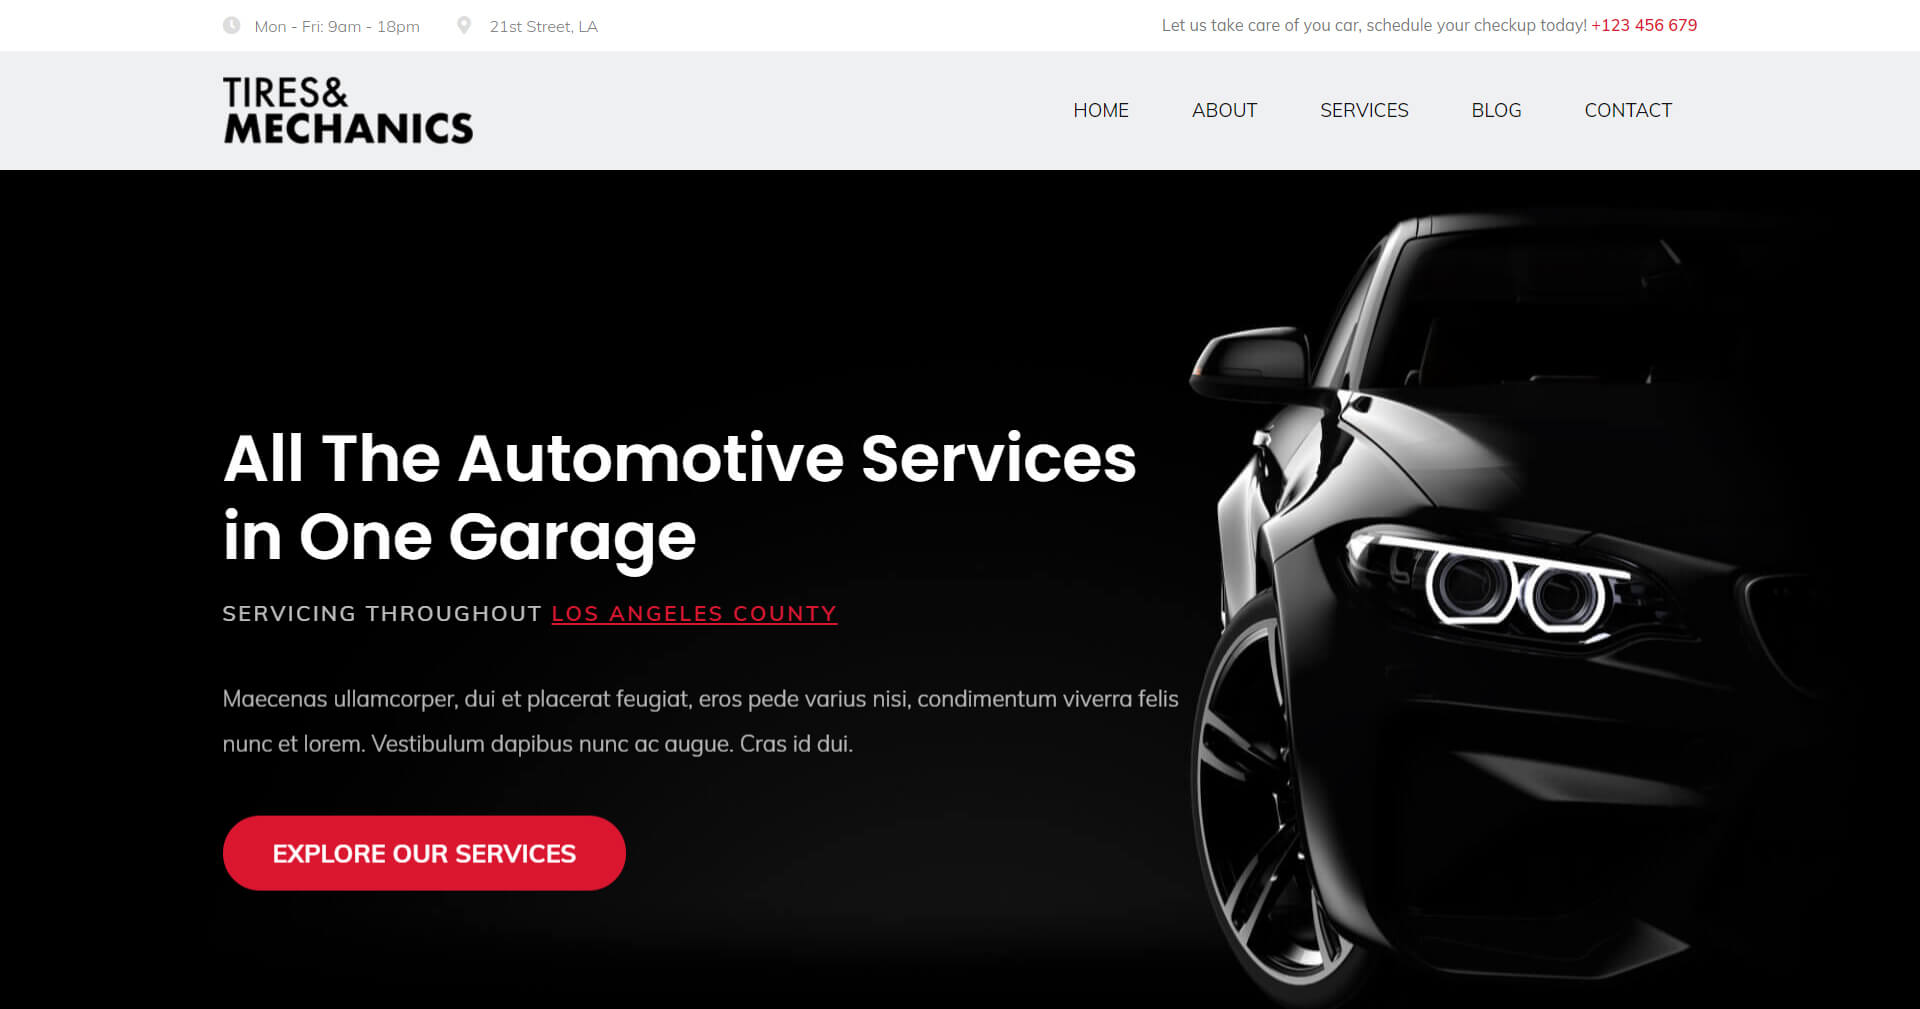 Tires & Mechanics Homepage